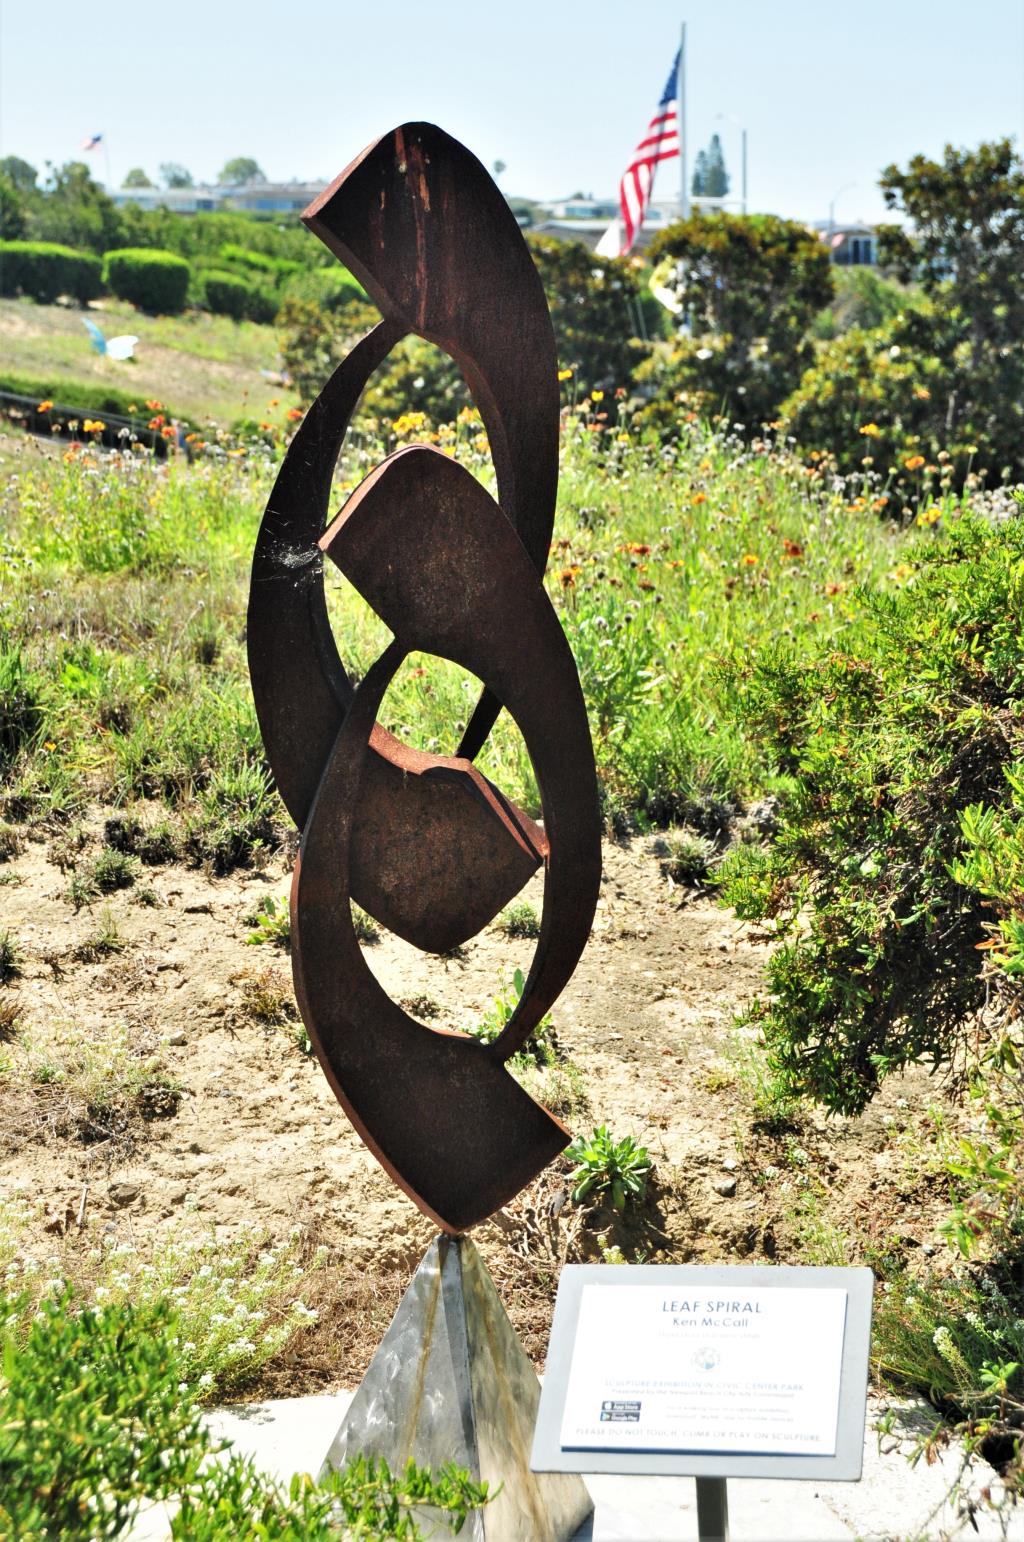 Sculpture Exhibition Phase 6 - Leaf Spiral - Ken McCall - Photo Credit Camille Escareal-Garcia